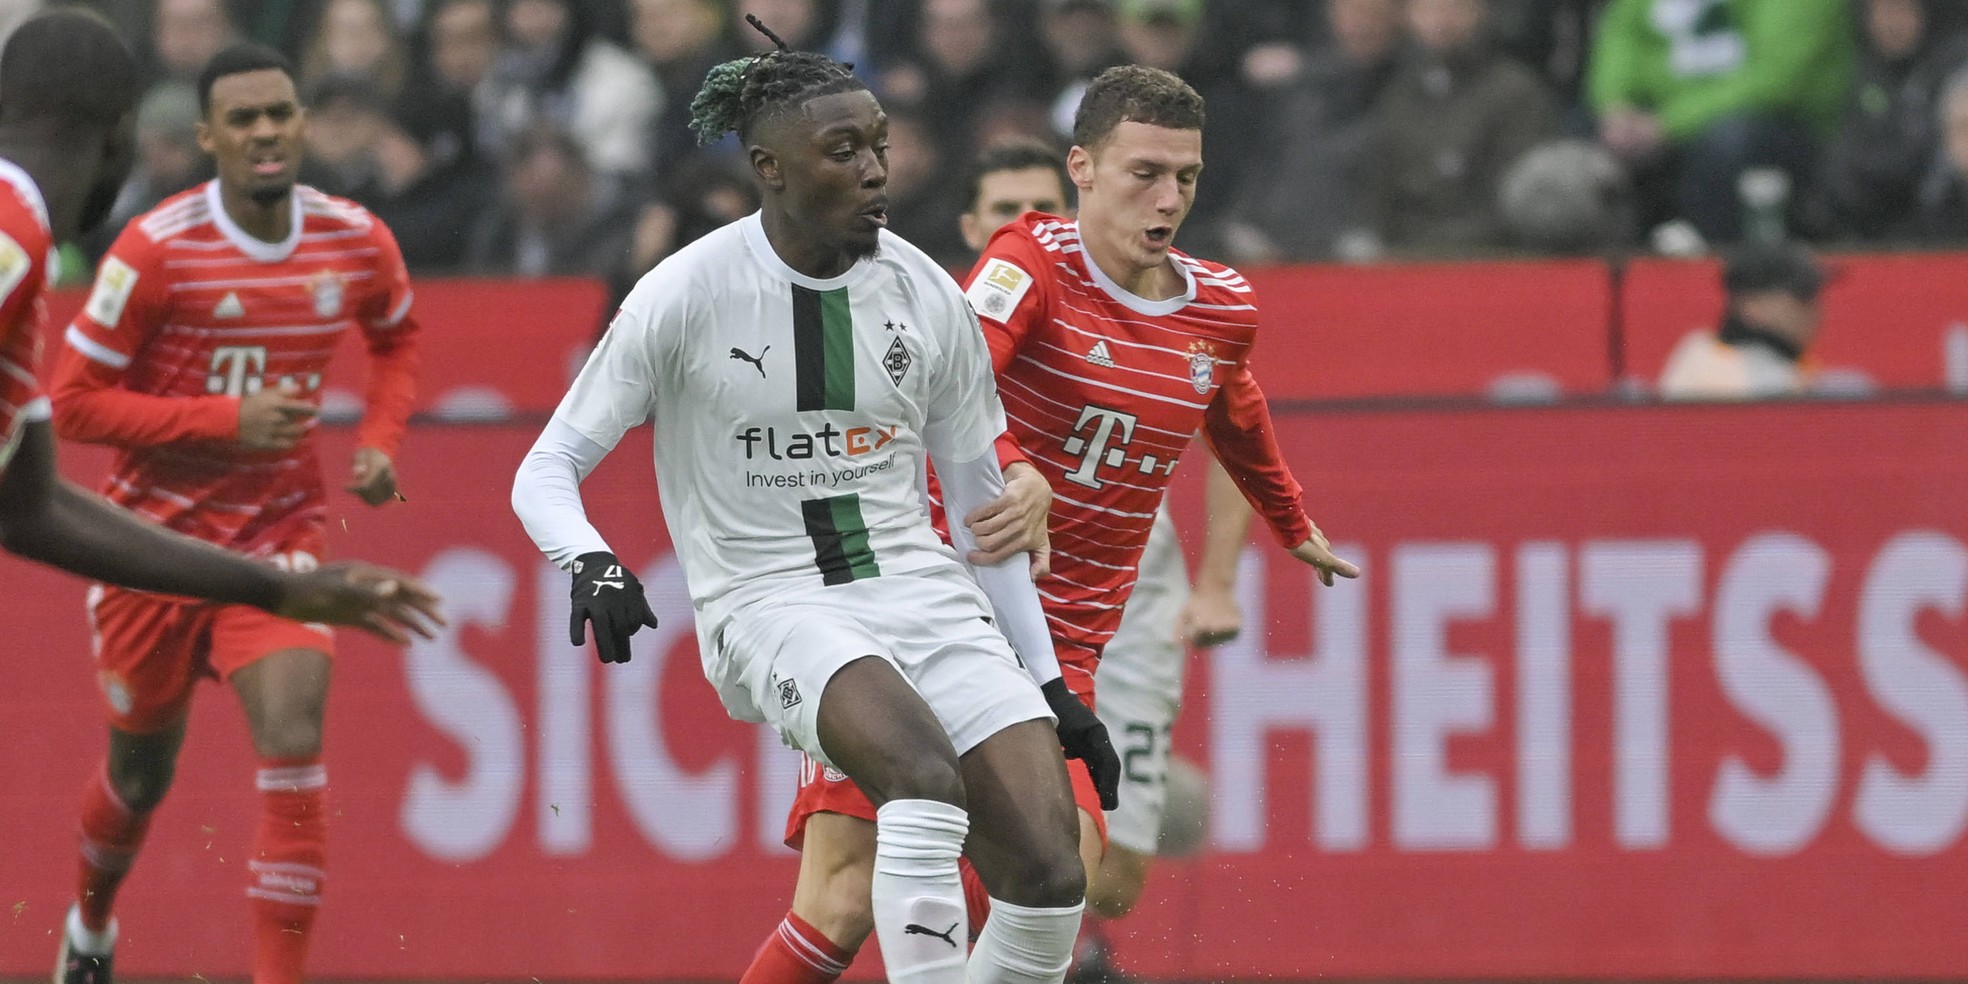 Kouadio Kone von Borussia Mönchengladbach